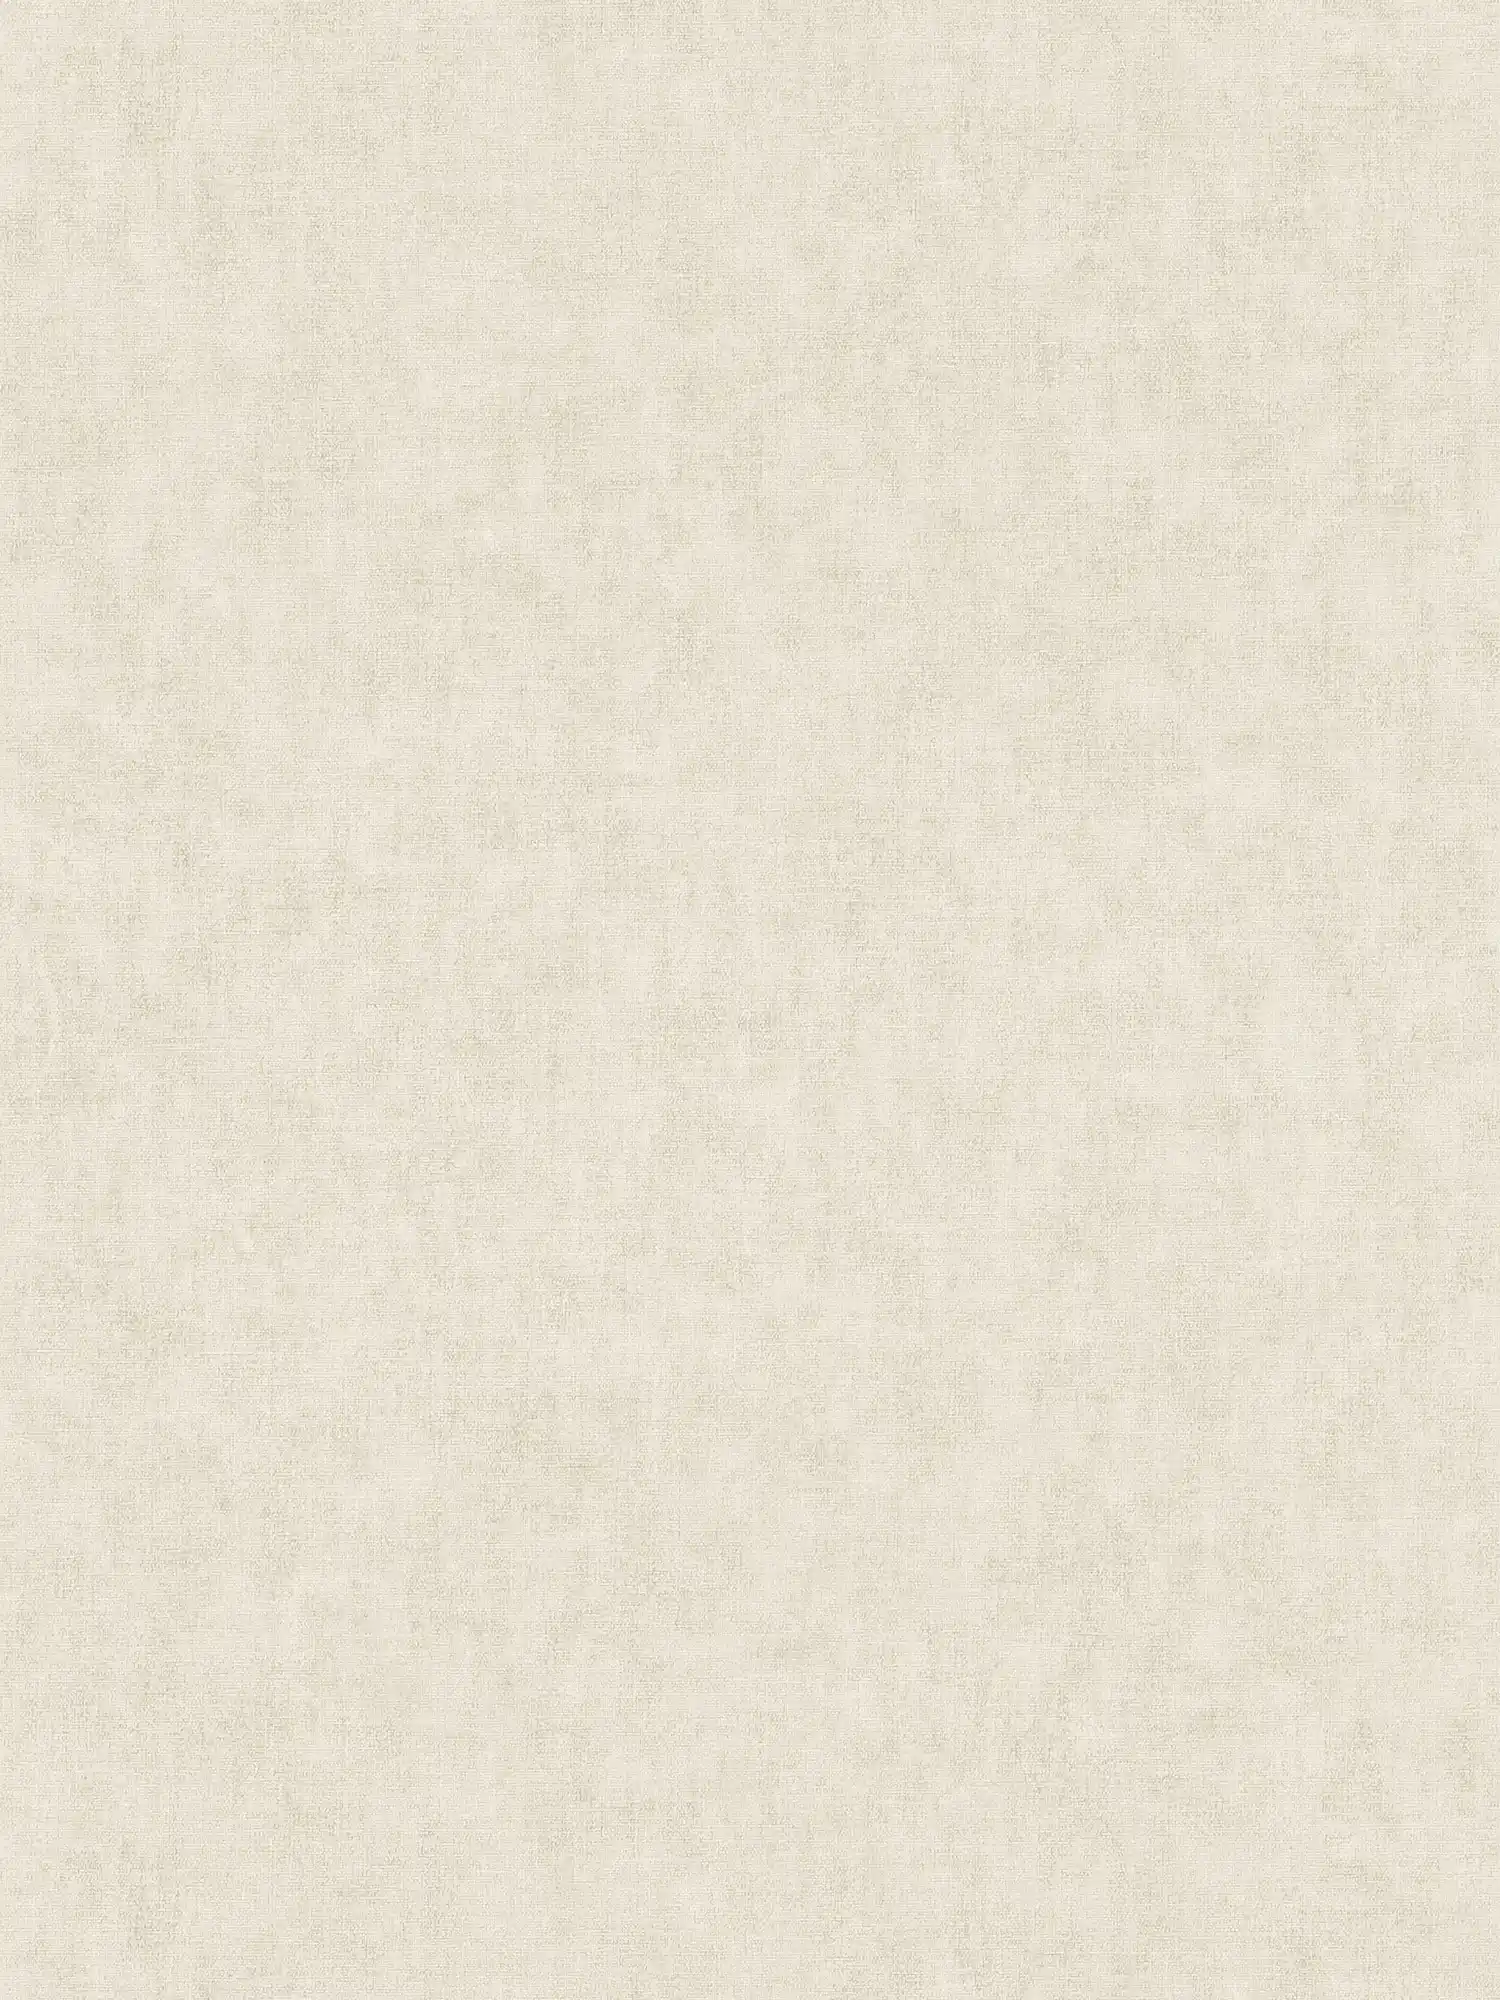 Scandinavian style plain wallpaper with linen look - beige
